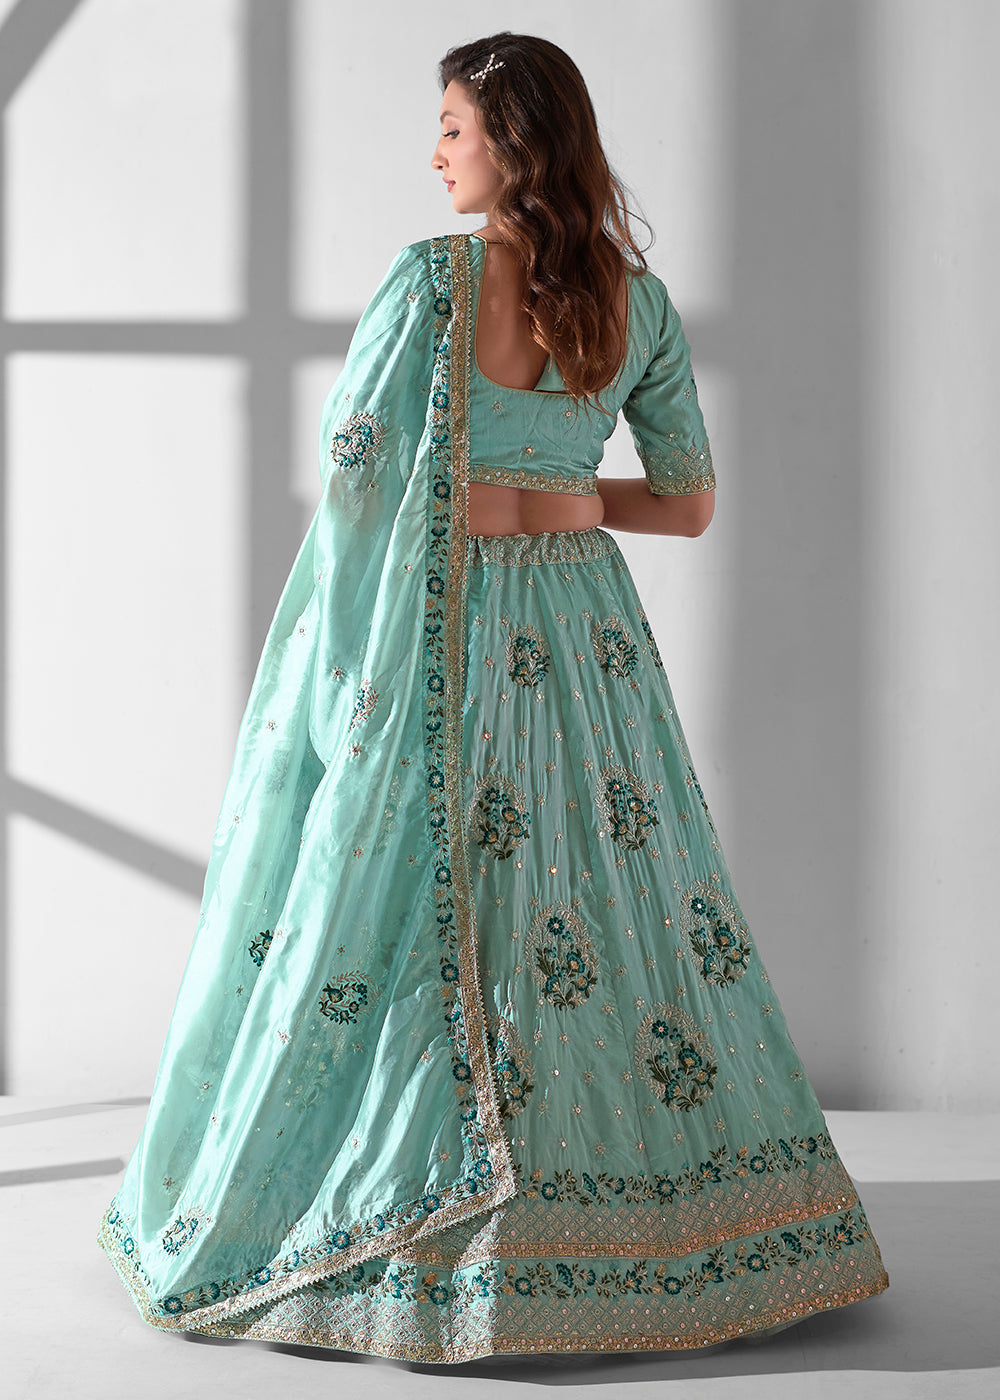 Buy Now Sky Blue Multi Embroidered Wedding Festive Lehenga Choli Online in USA, UK, Canada & Worldwide at Empress Clothing. 